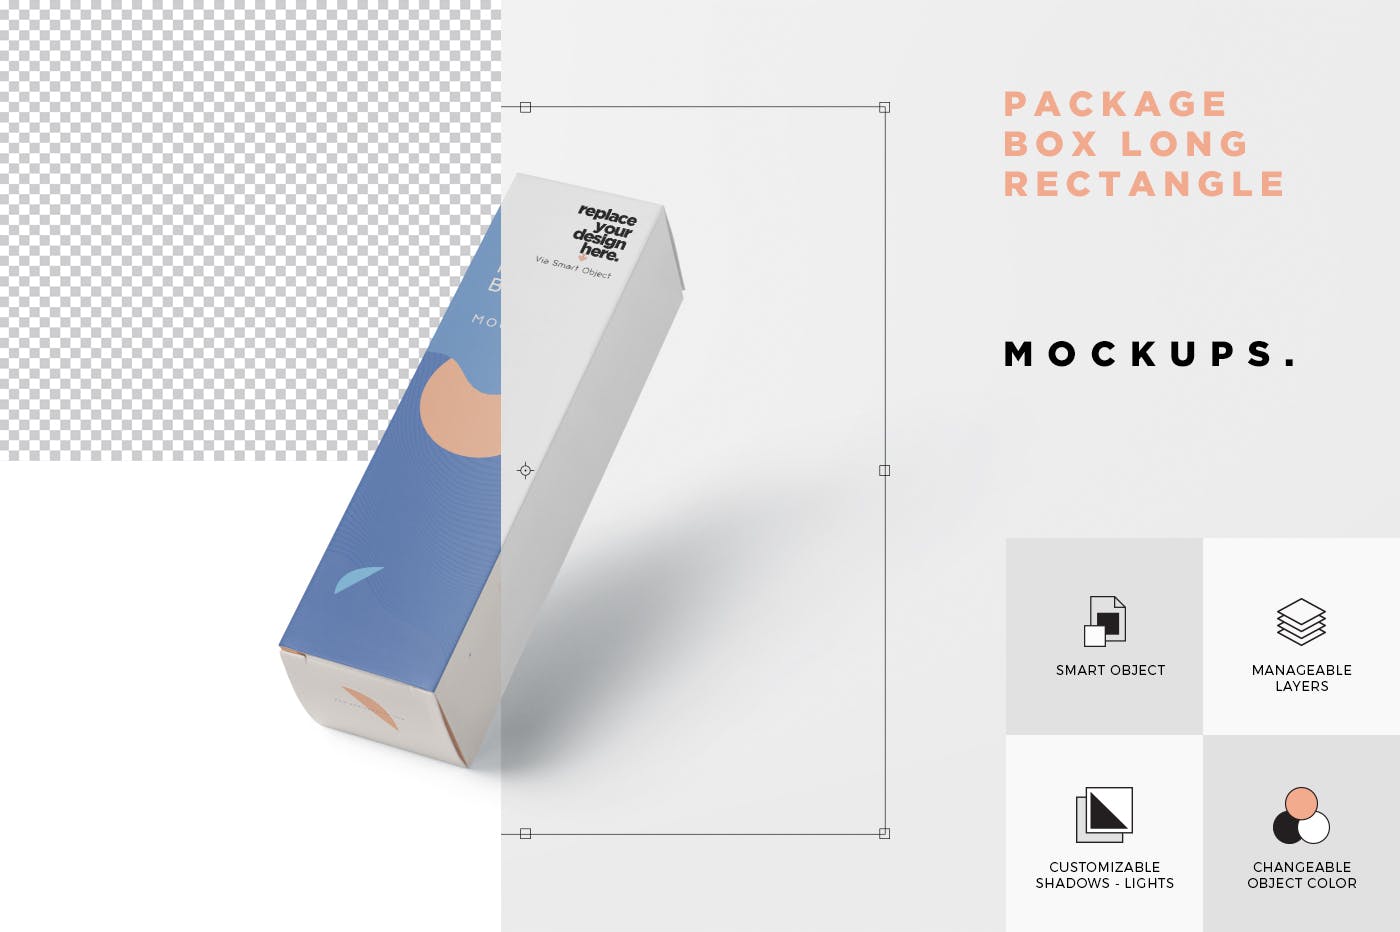 长矩形包装盒外观设计16图库精选 Package Box Mock-Up – Long Rectangle Shape插图(4)